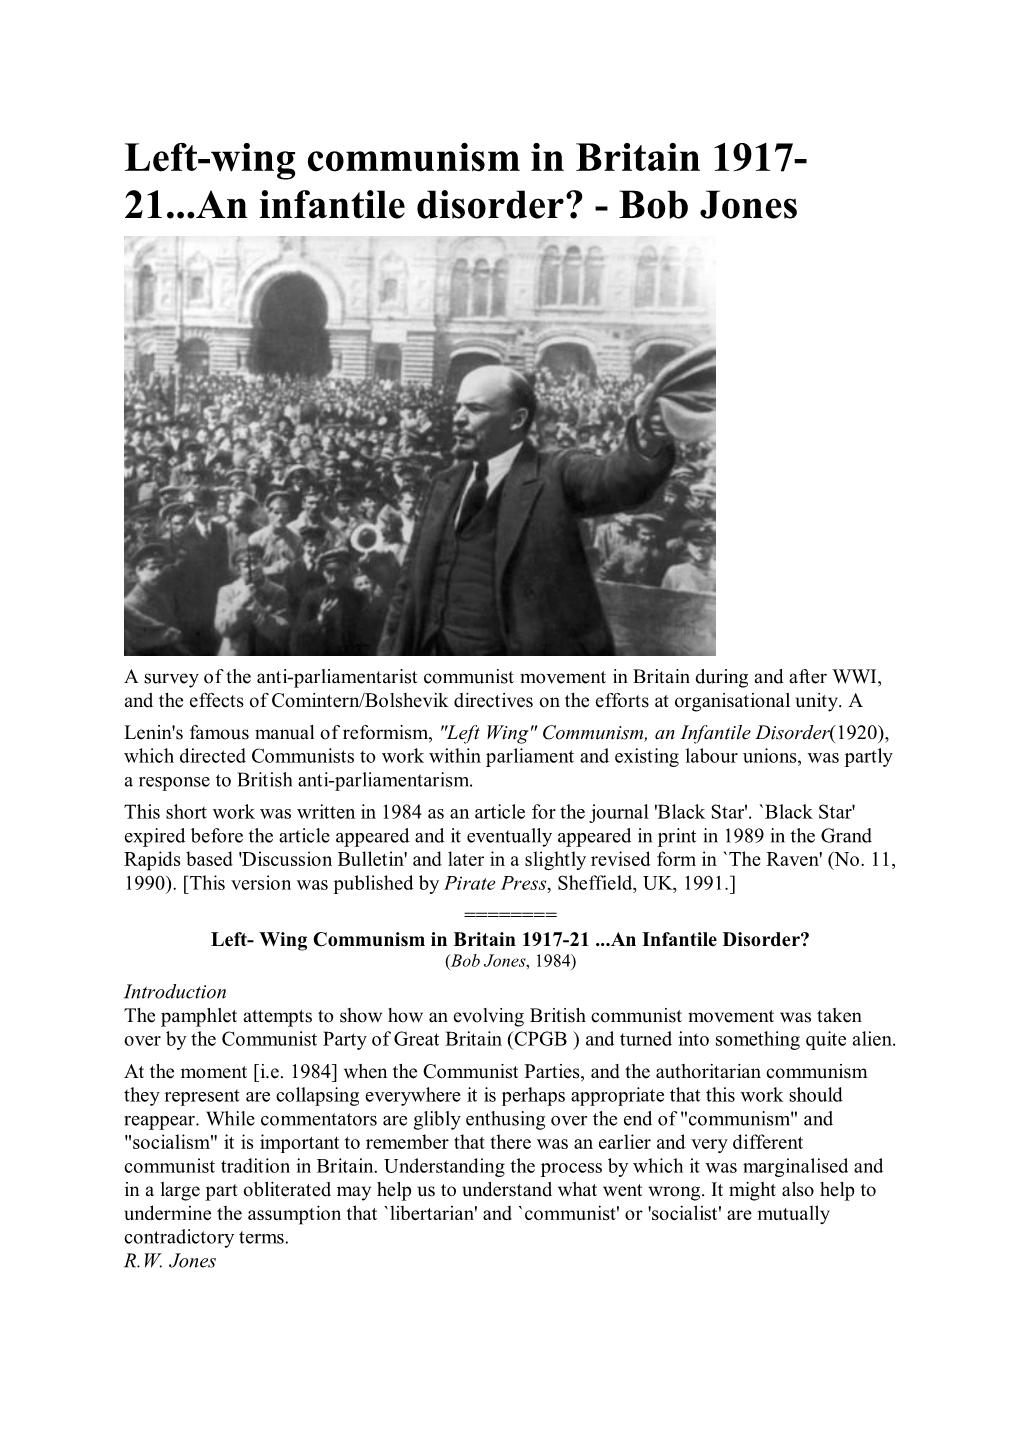 Left-Wing Communism in Britain 1917- 21...An Infantile Disorder? - Bob Jones